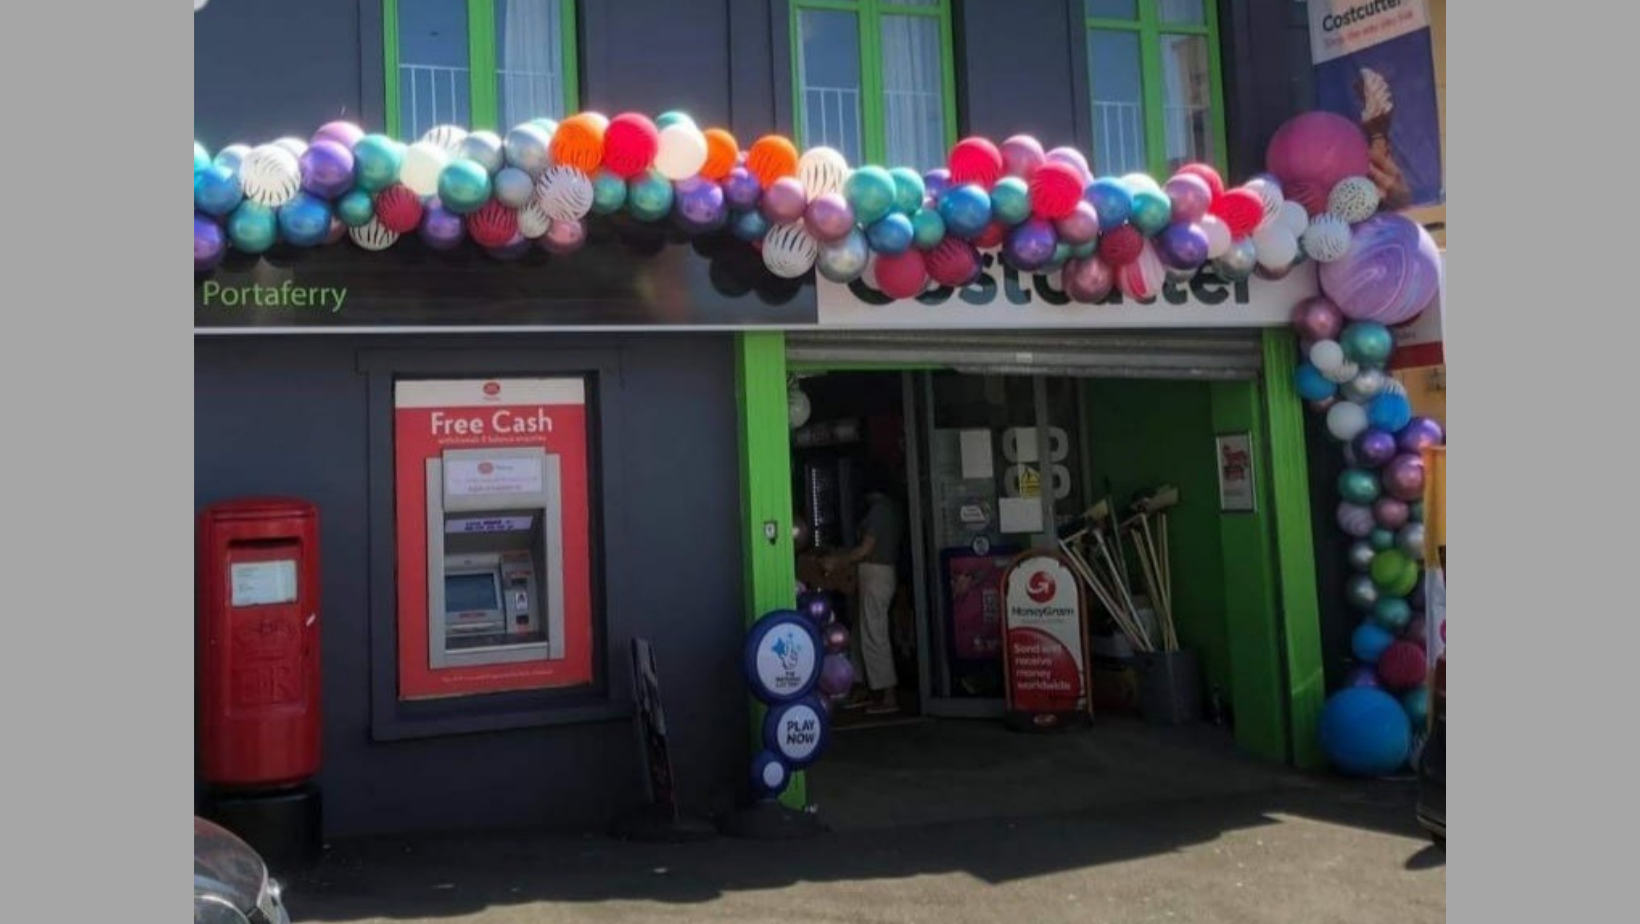 PortaferryCostcutter, Post Office and Balloon Flair